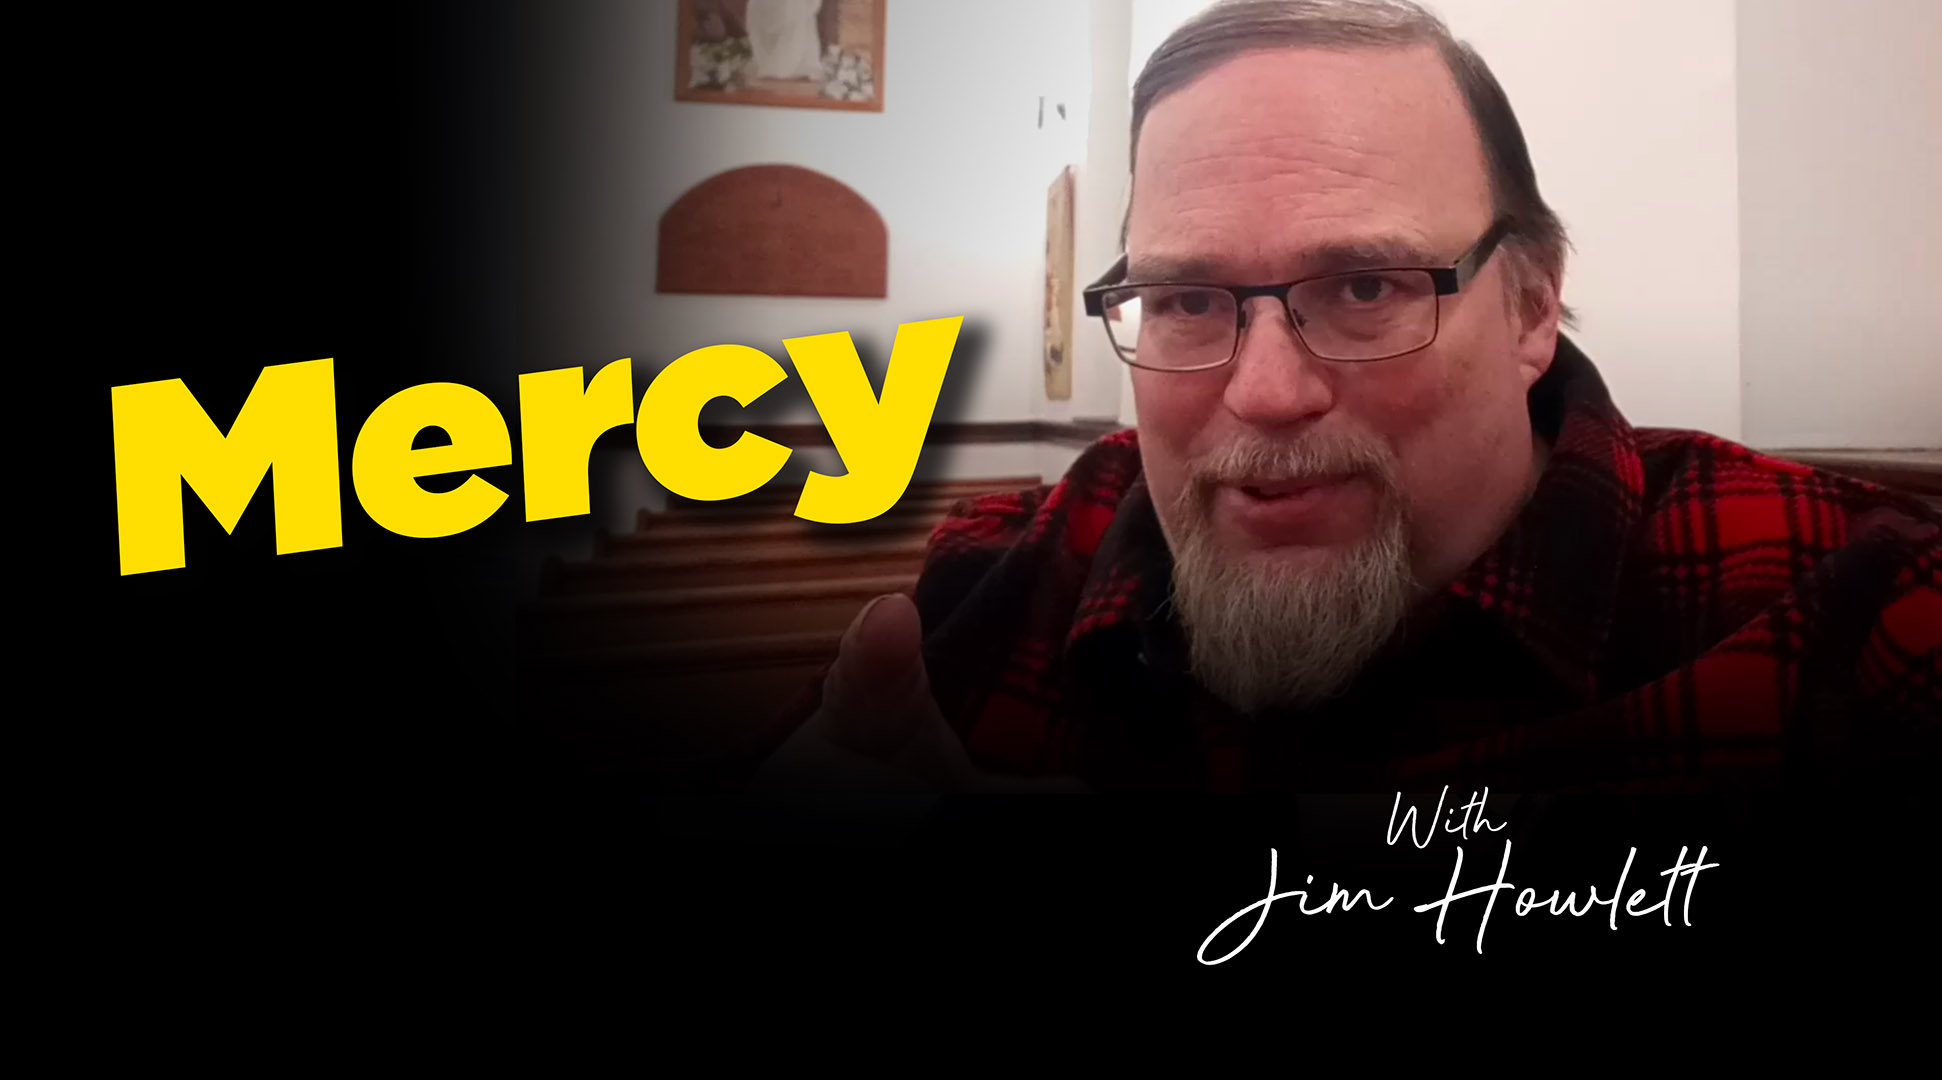 Jim Howlett on Mercy